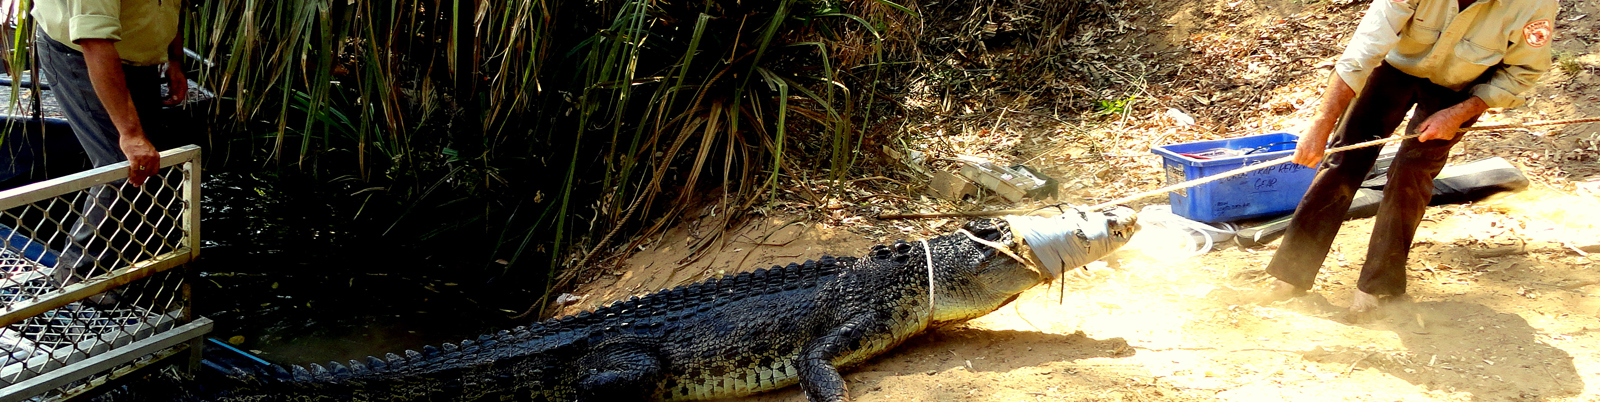 Captured Saltwater Crocodile